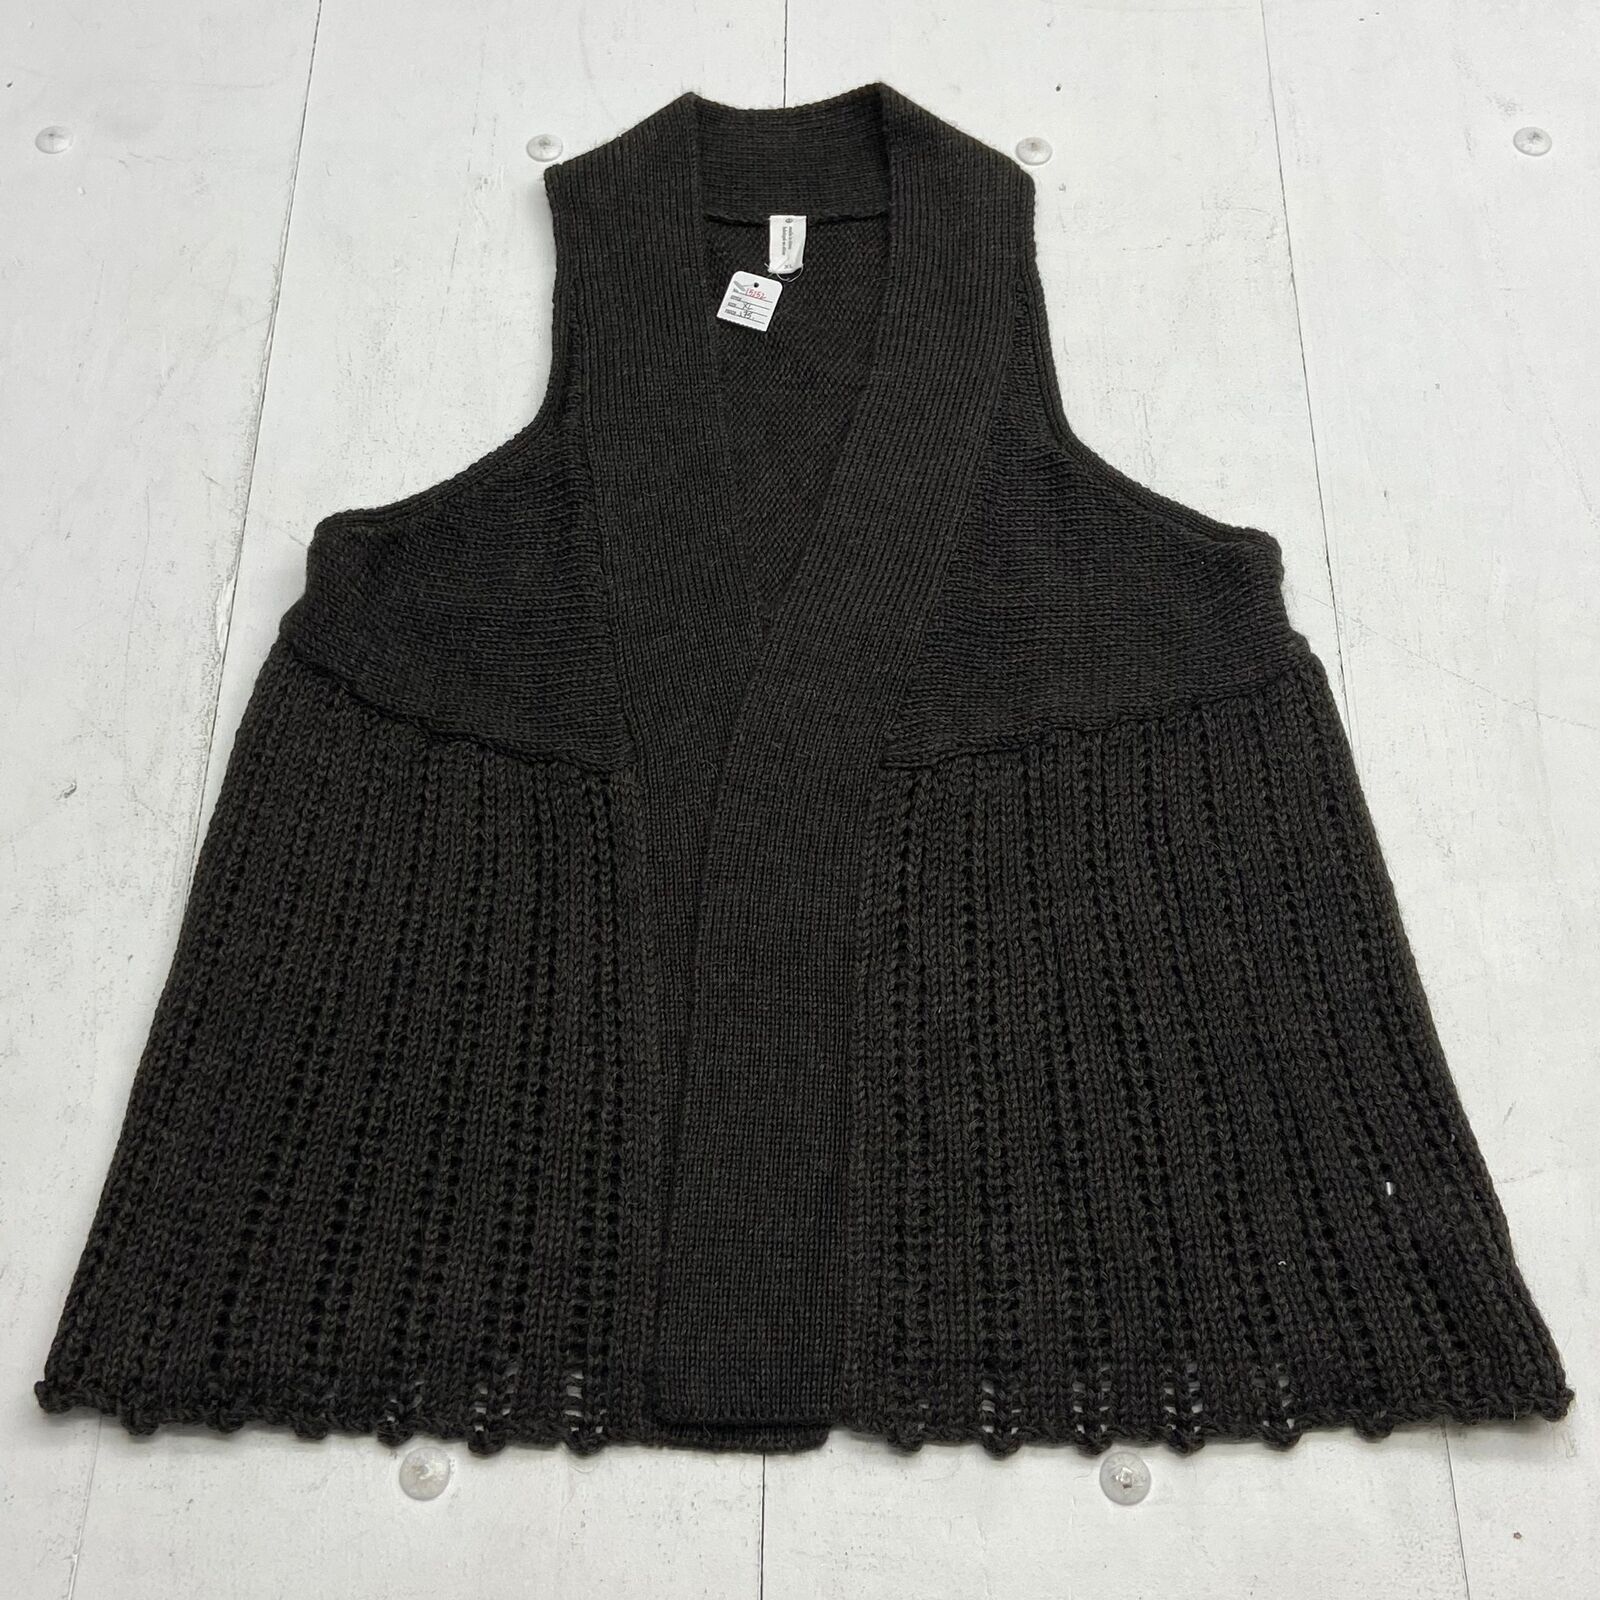 Isda & Co Chocolate Knit Cardigan Sweater Vest Women Size XL NEW